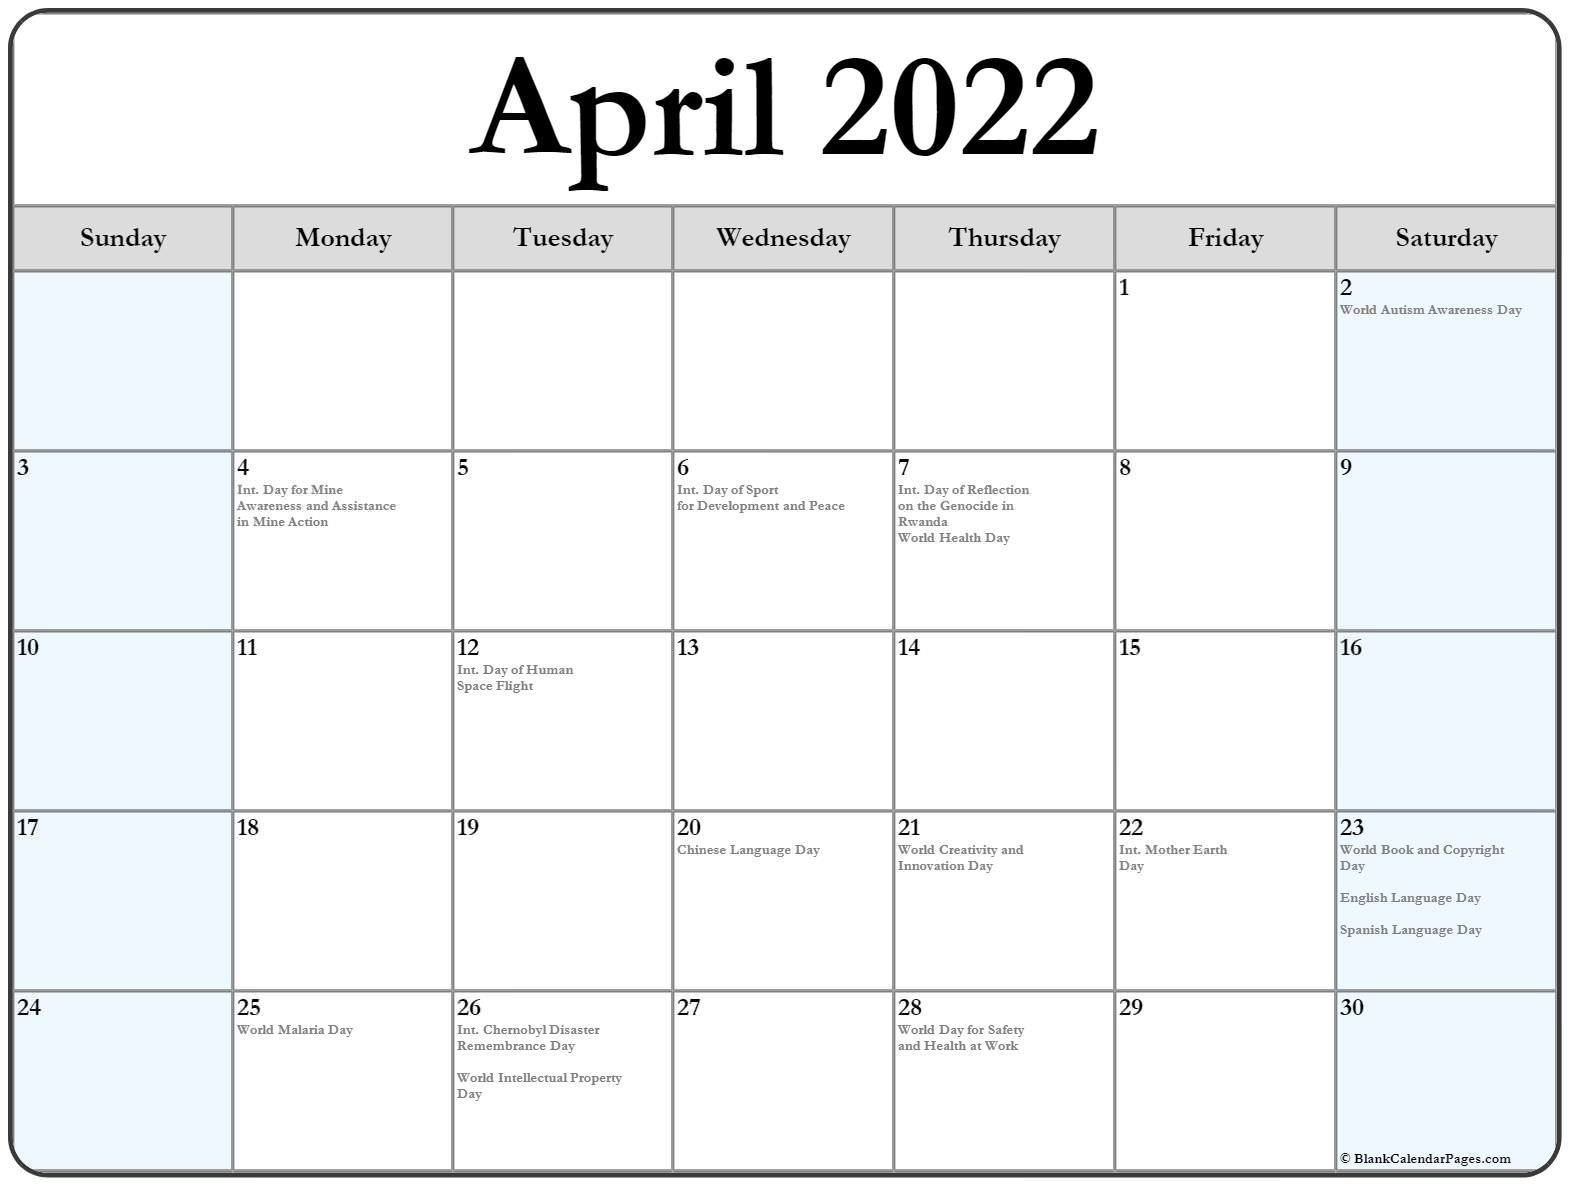 How to Calendar May 2021 To April 2022 | Get Your Calendar Printable